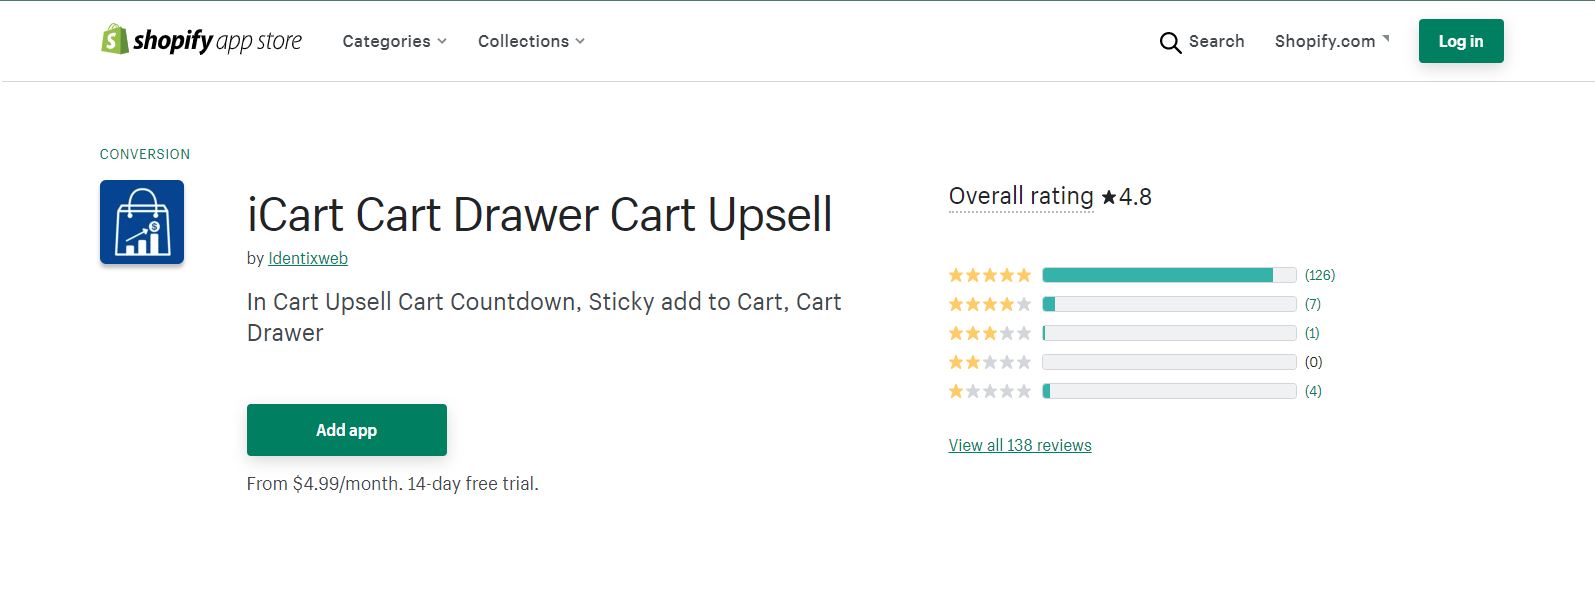 icart-cart-drawer-cart-upsell-reviews